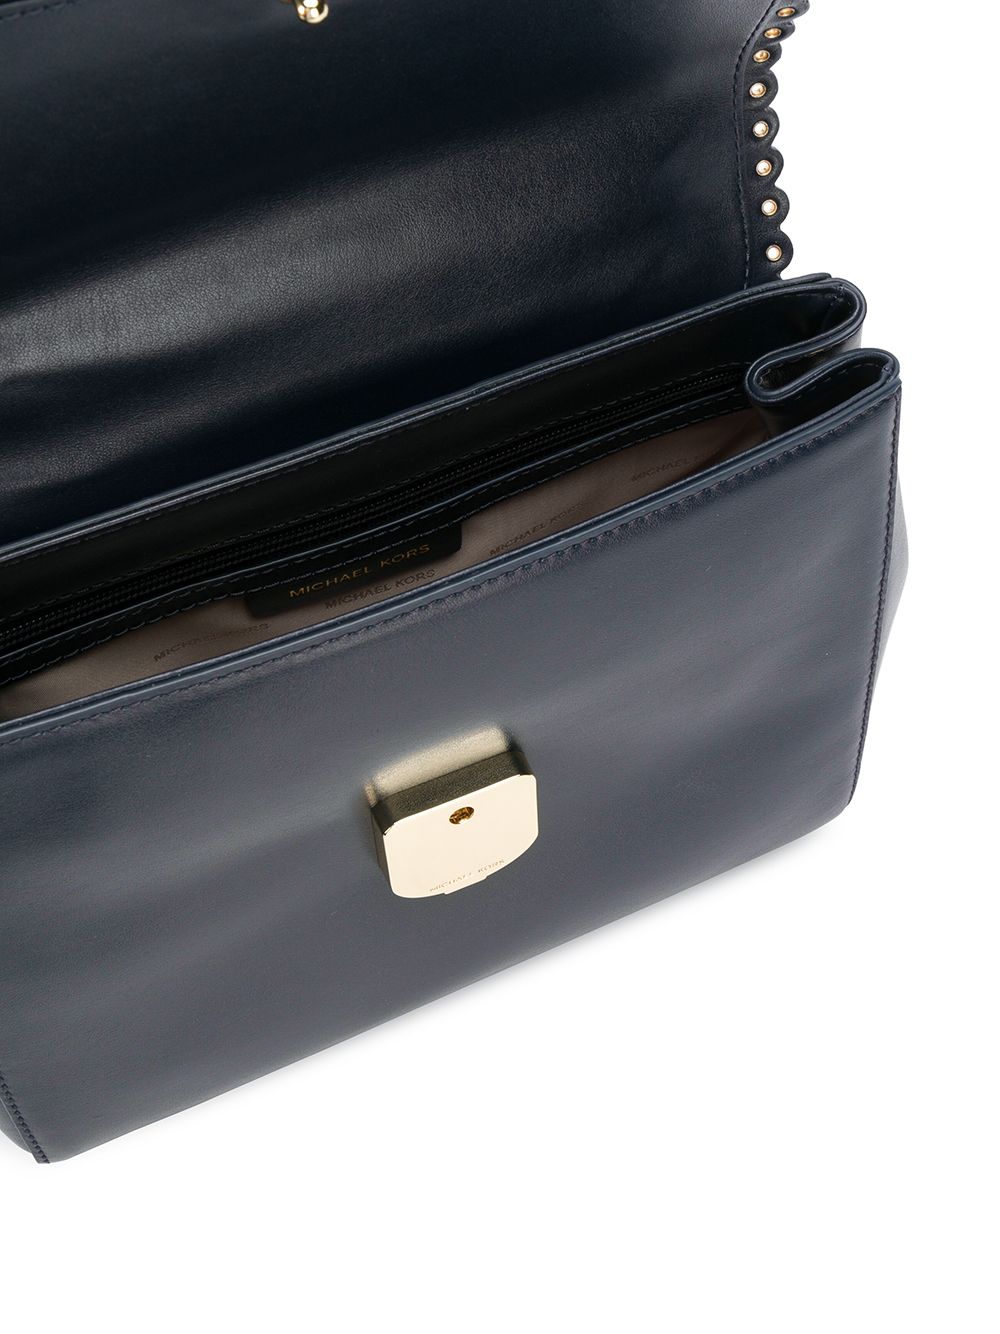 Michael Kors Classic Tote Handbag